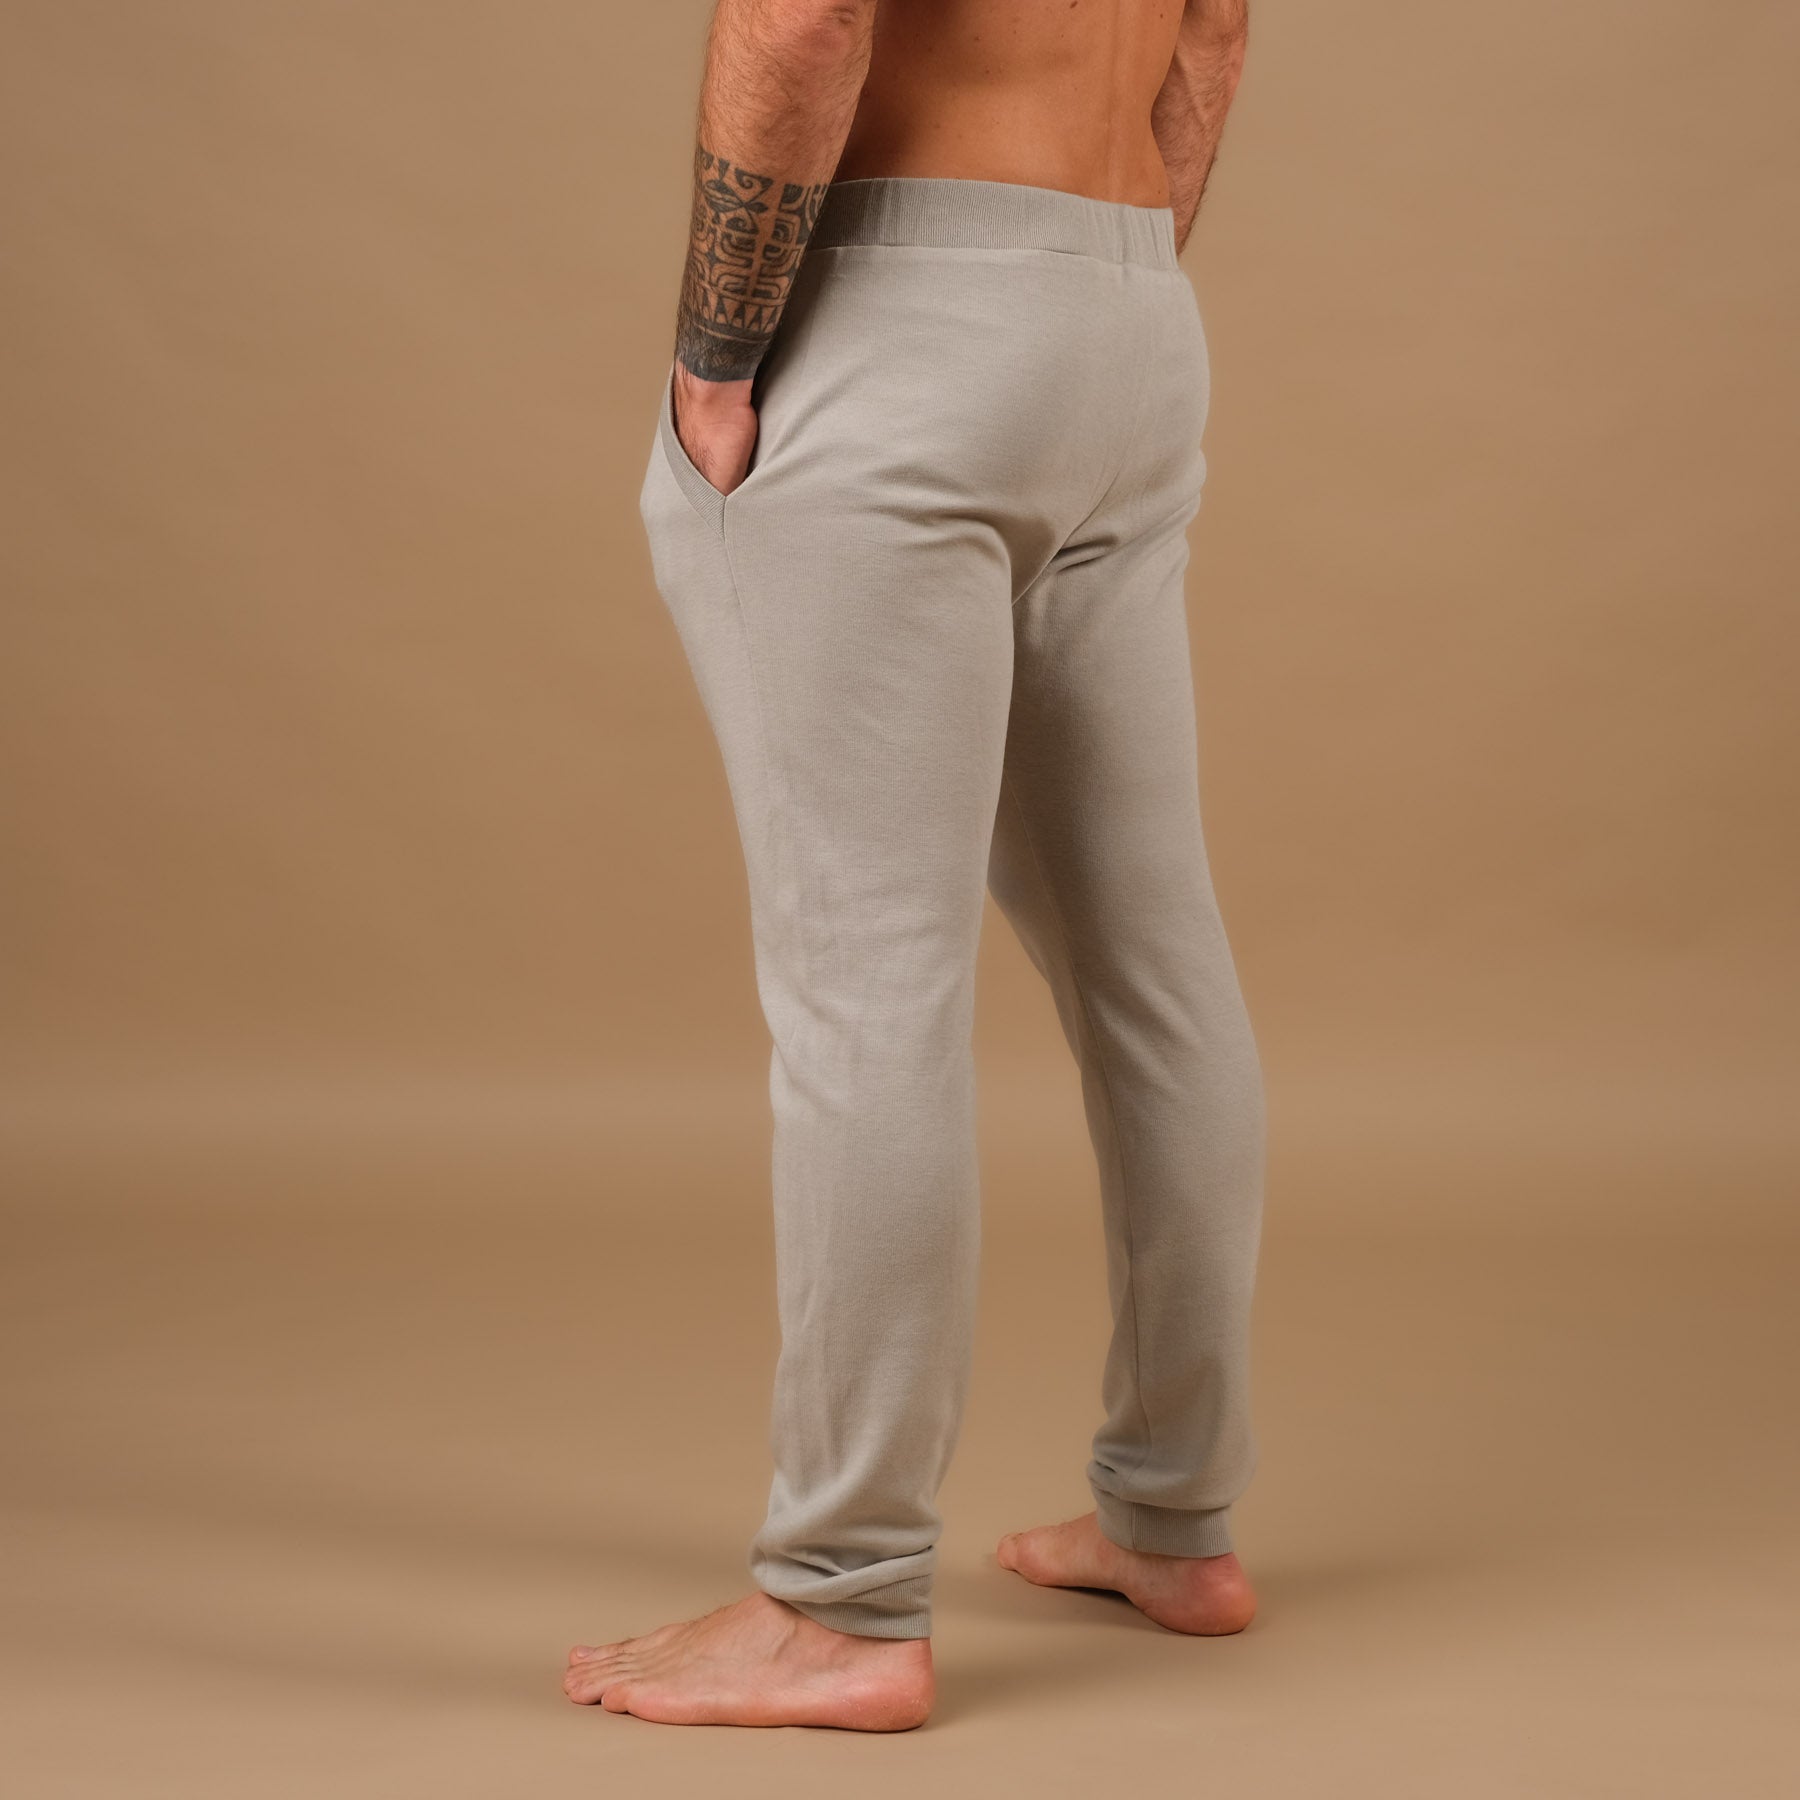 Pantaloni da jogging yoga unisex Grigio accogliente